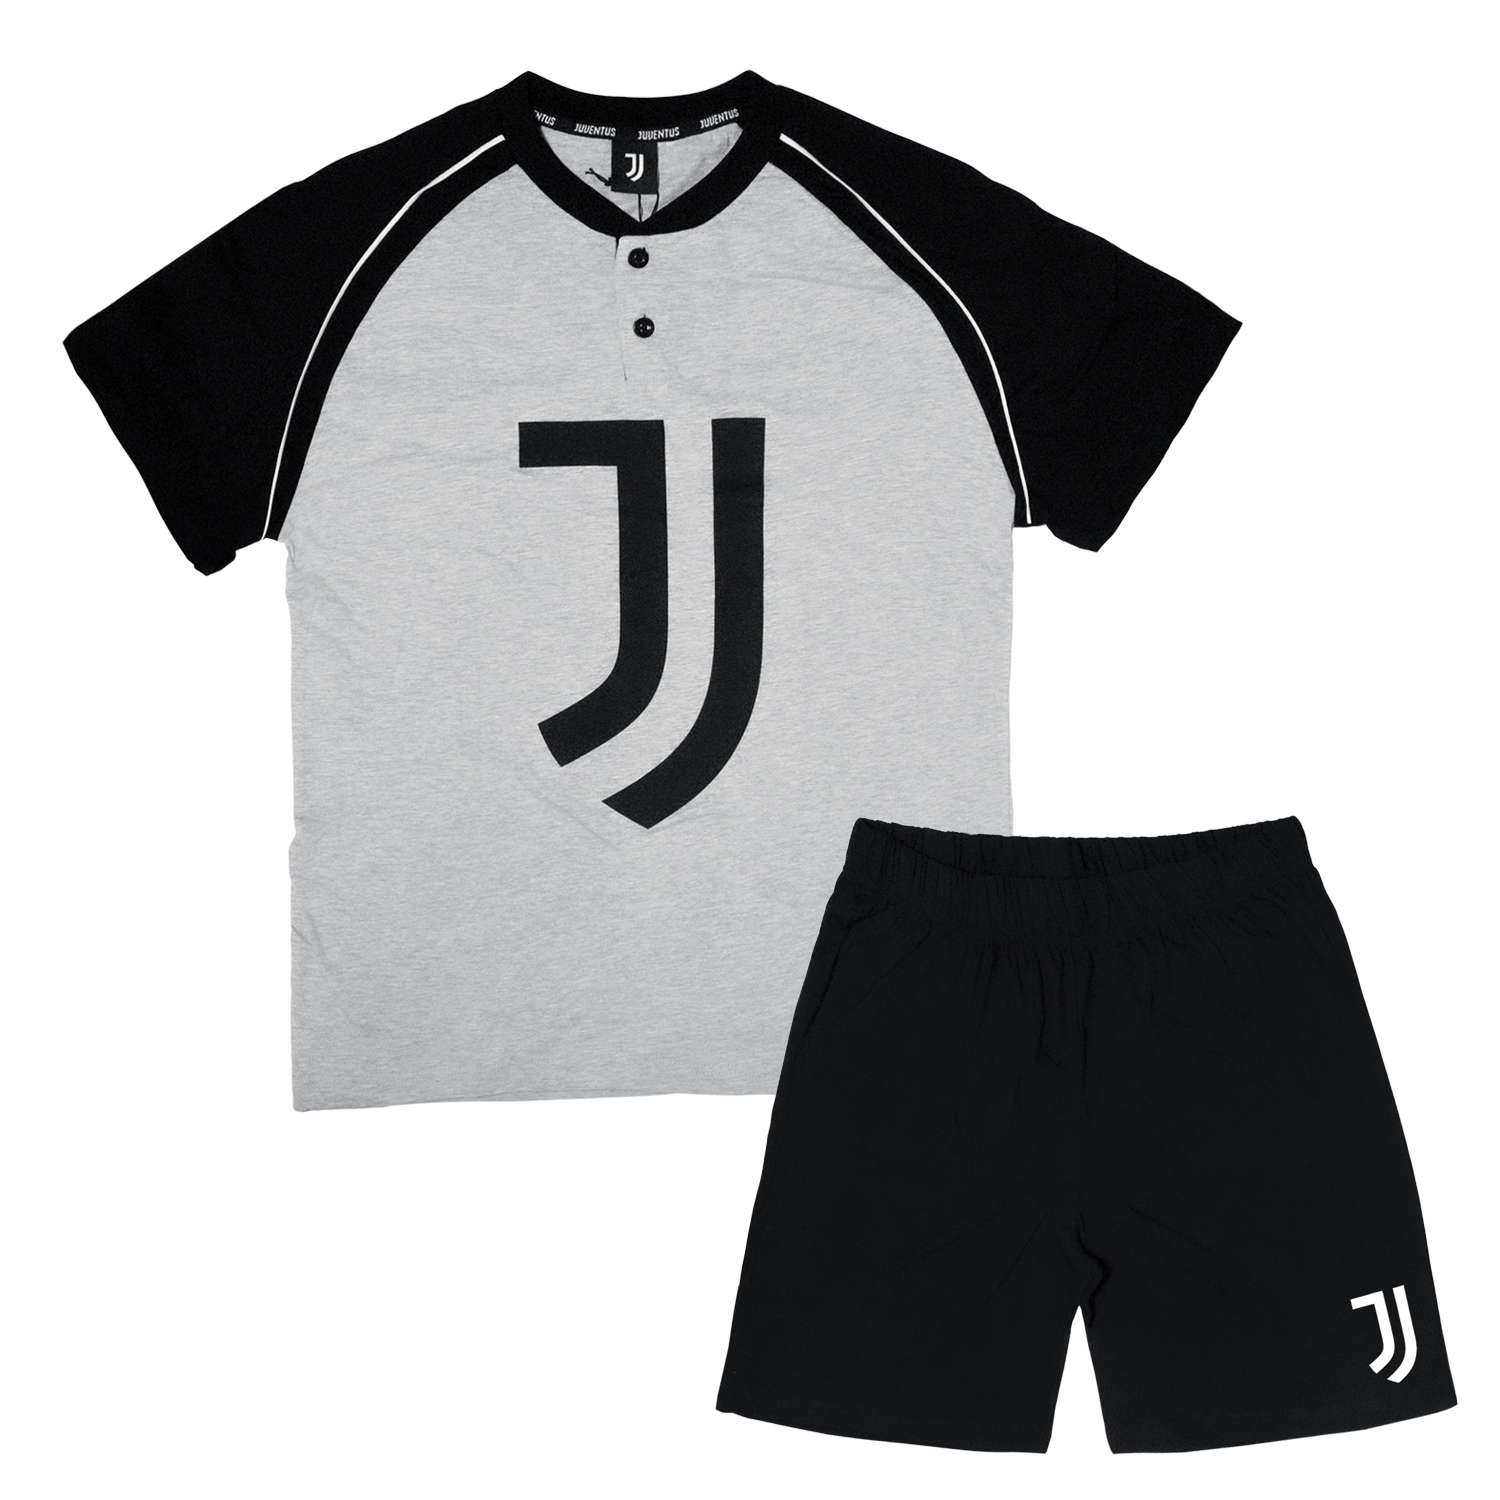 Pigiama Juventus Prodotto Ufficiale Calcio Juve Uomo Adulto JU14086  (Grigio)